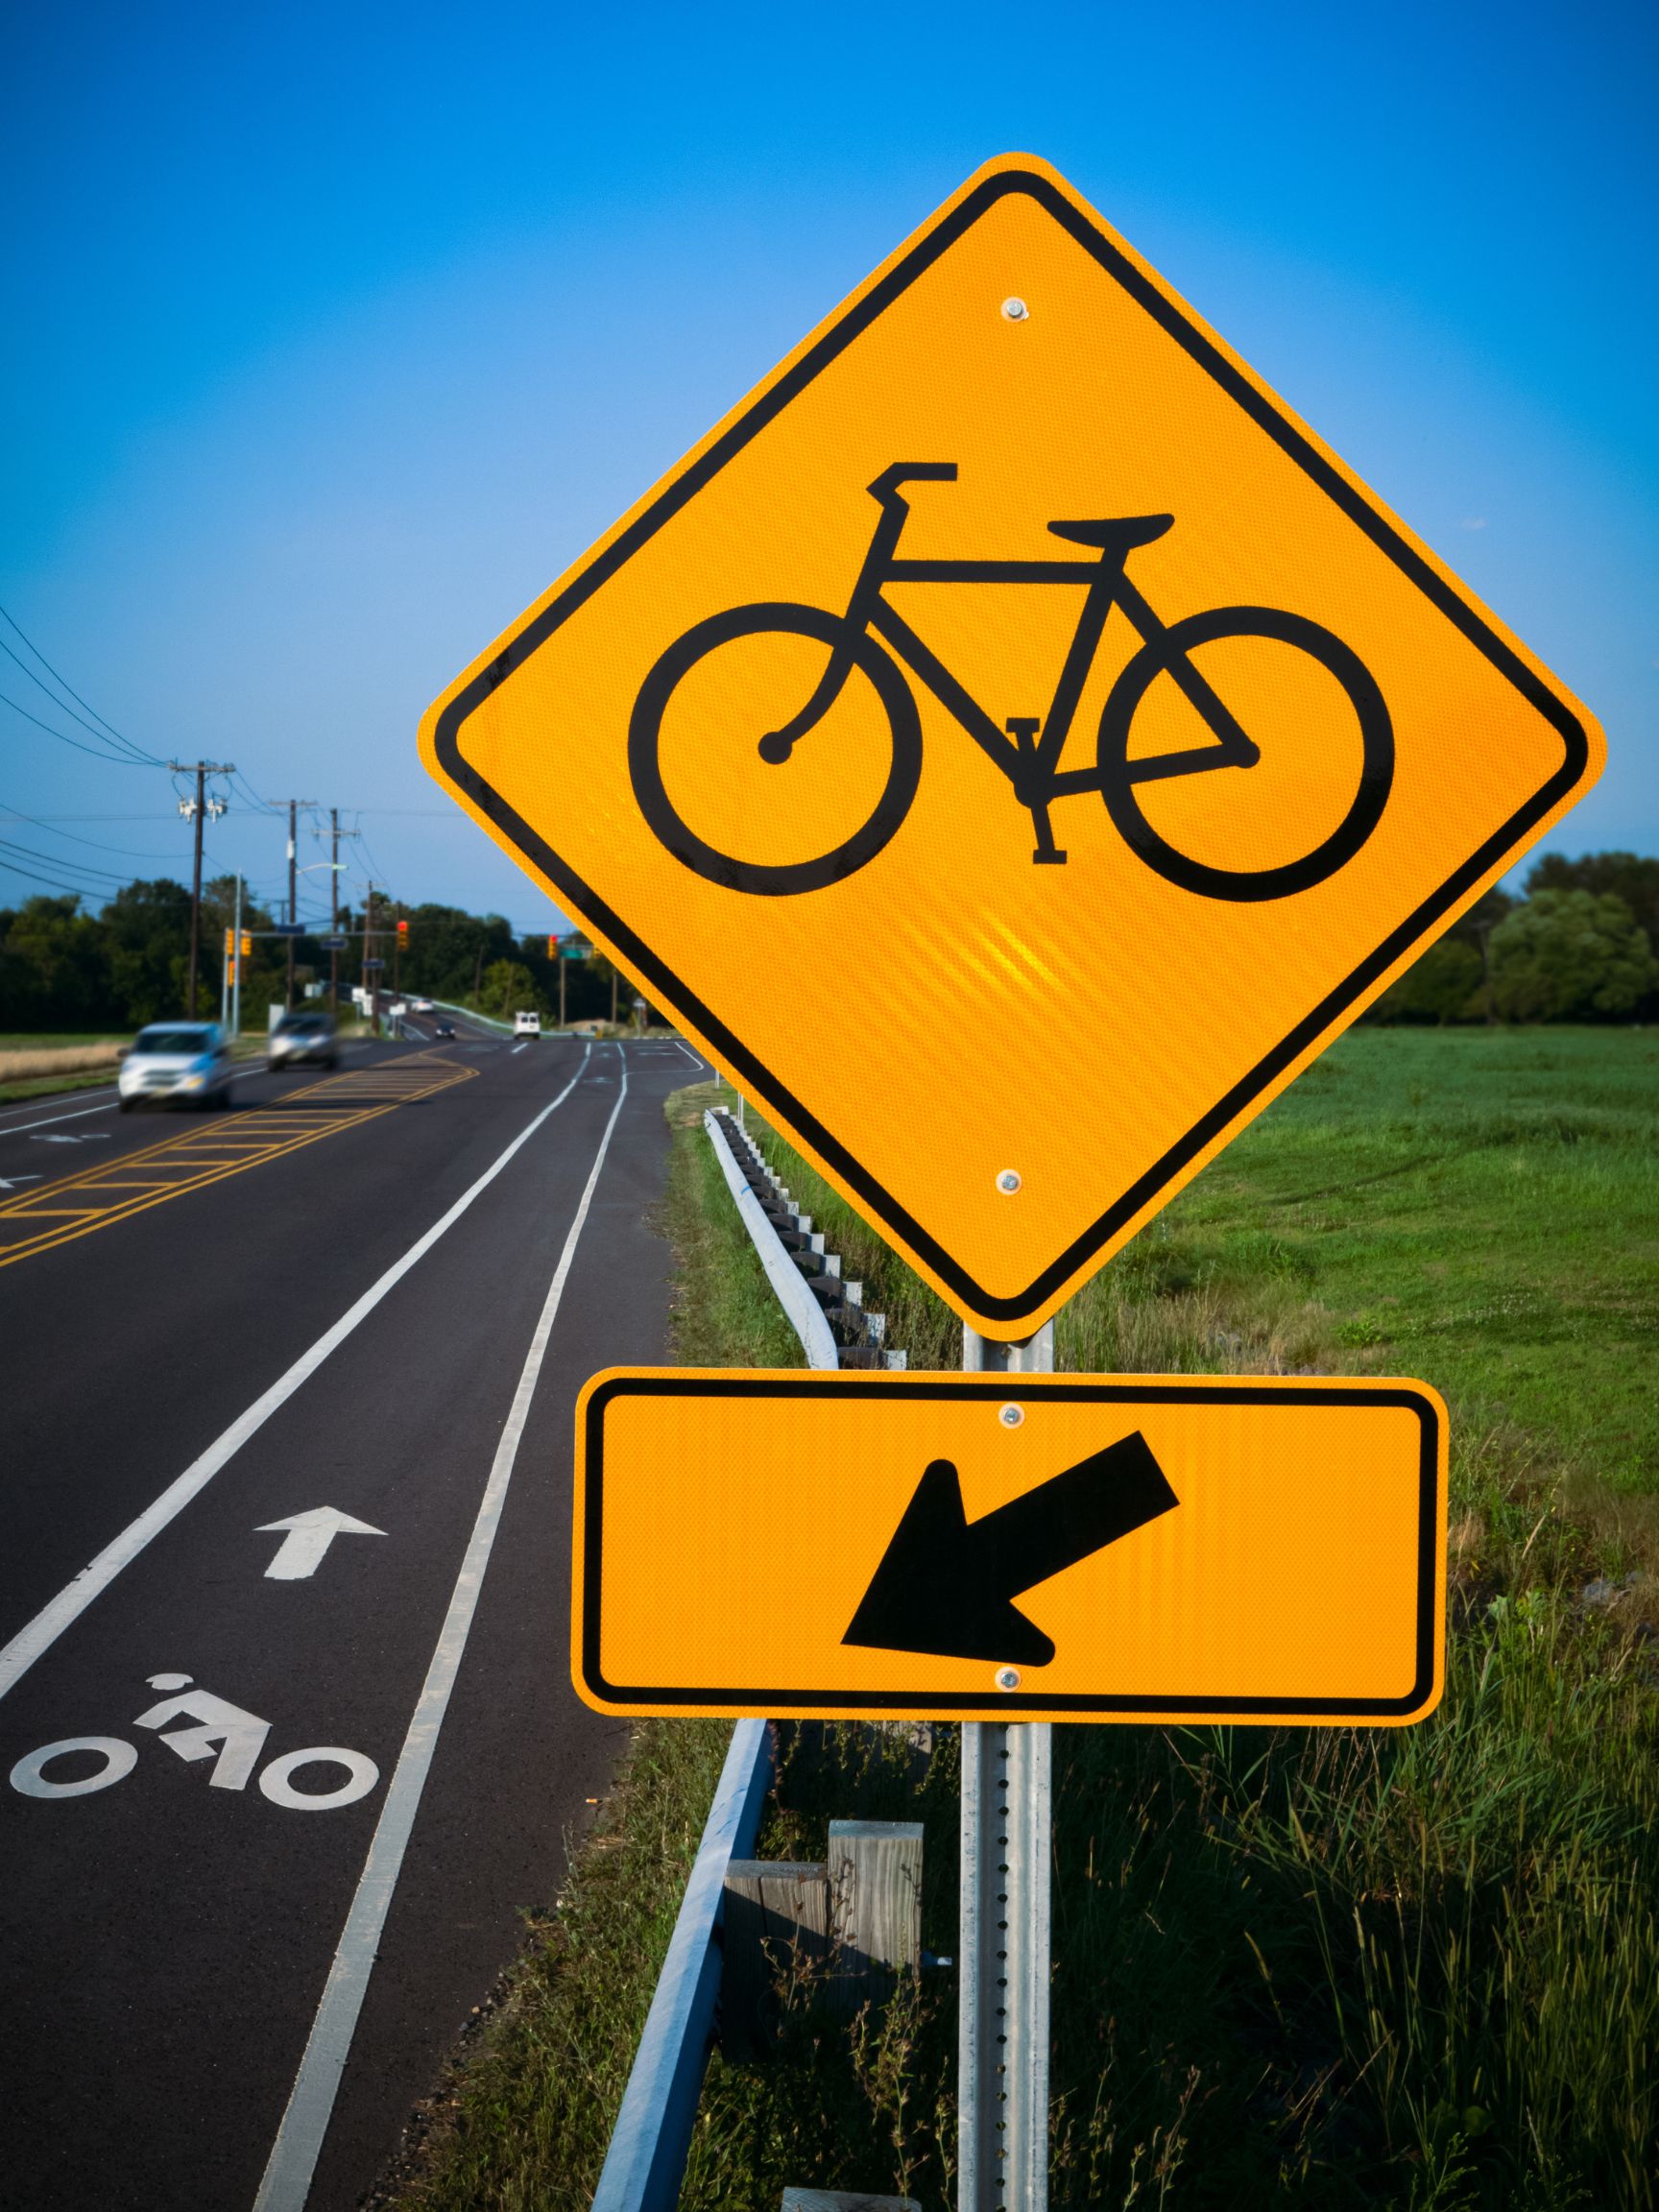 Are Bike Lanes Really Safer?